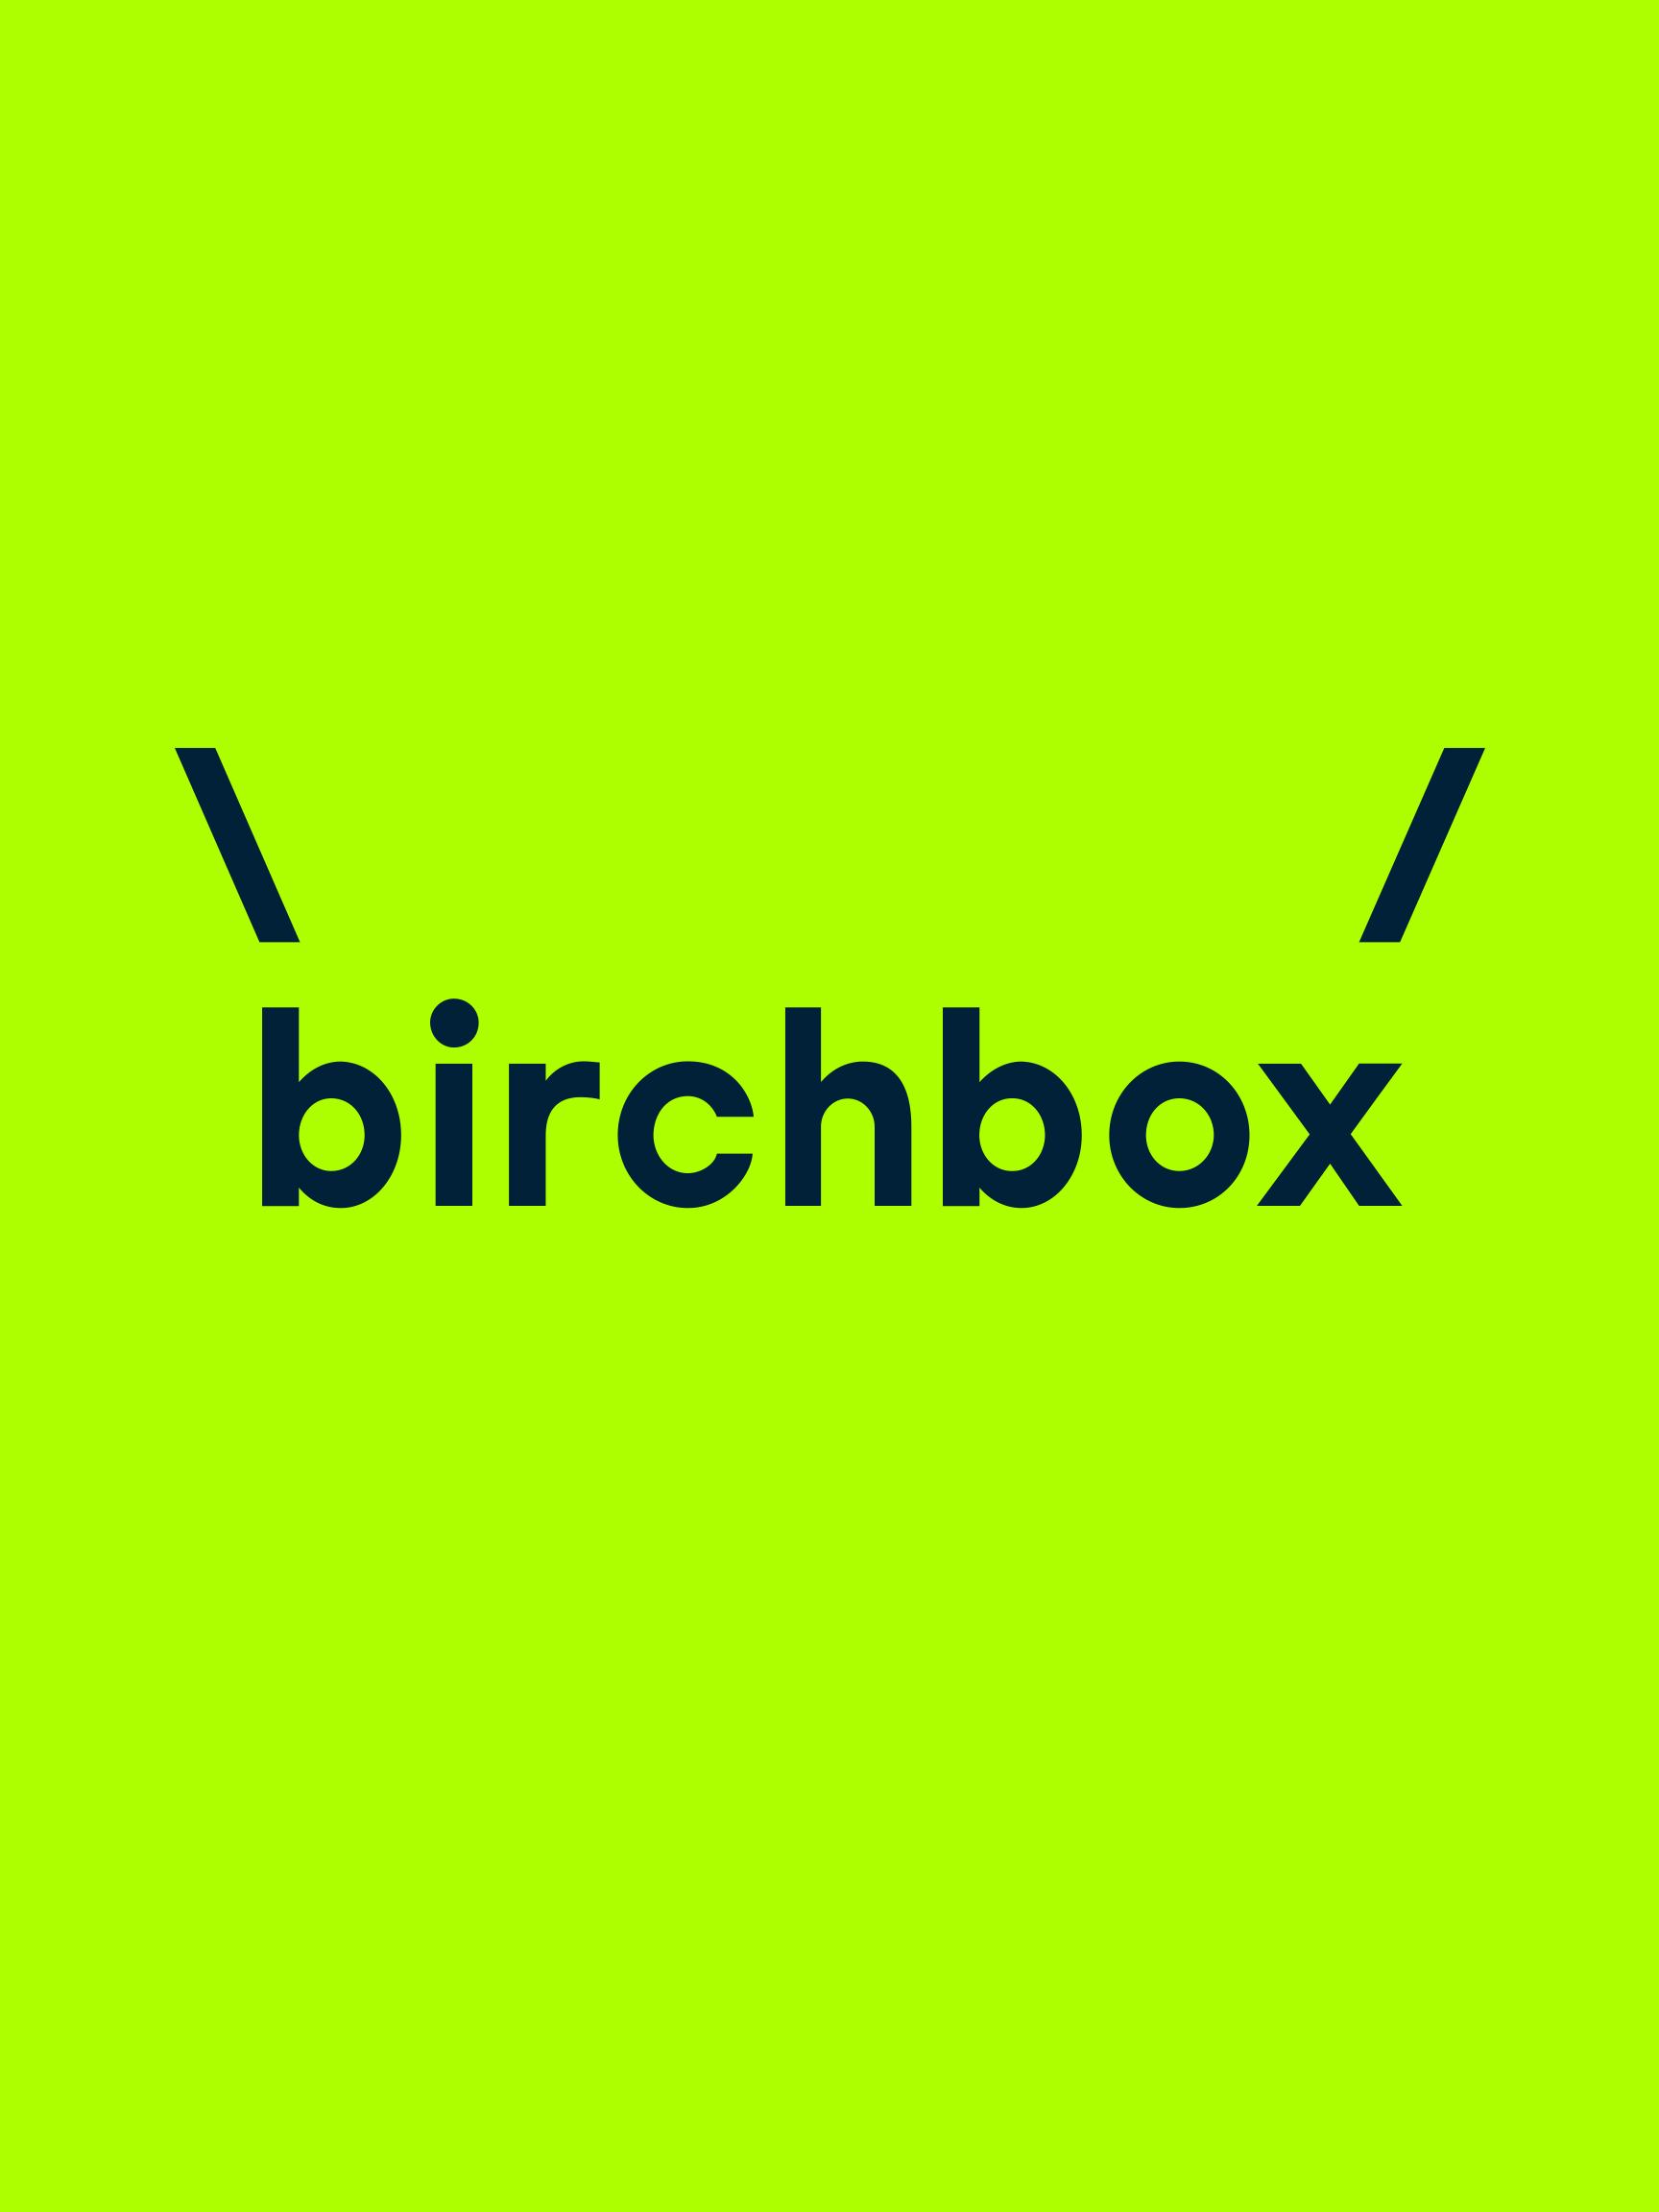 Birchbox logo 2x